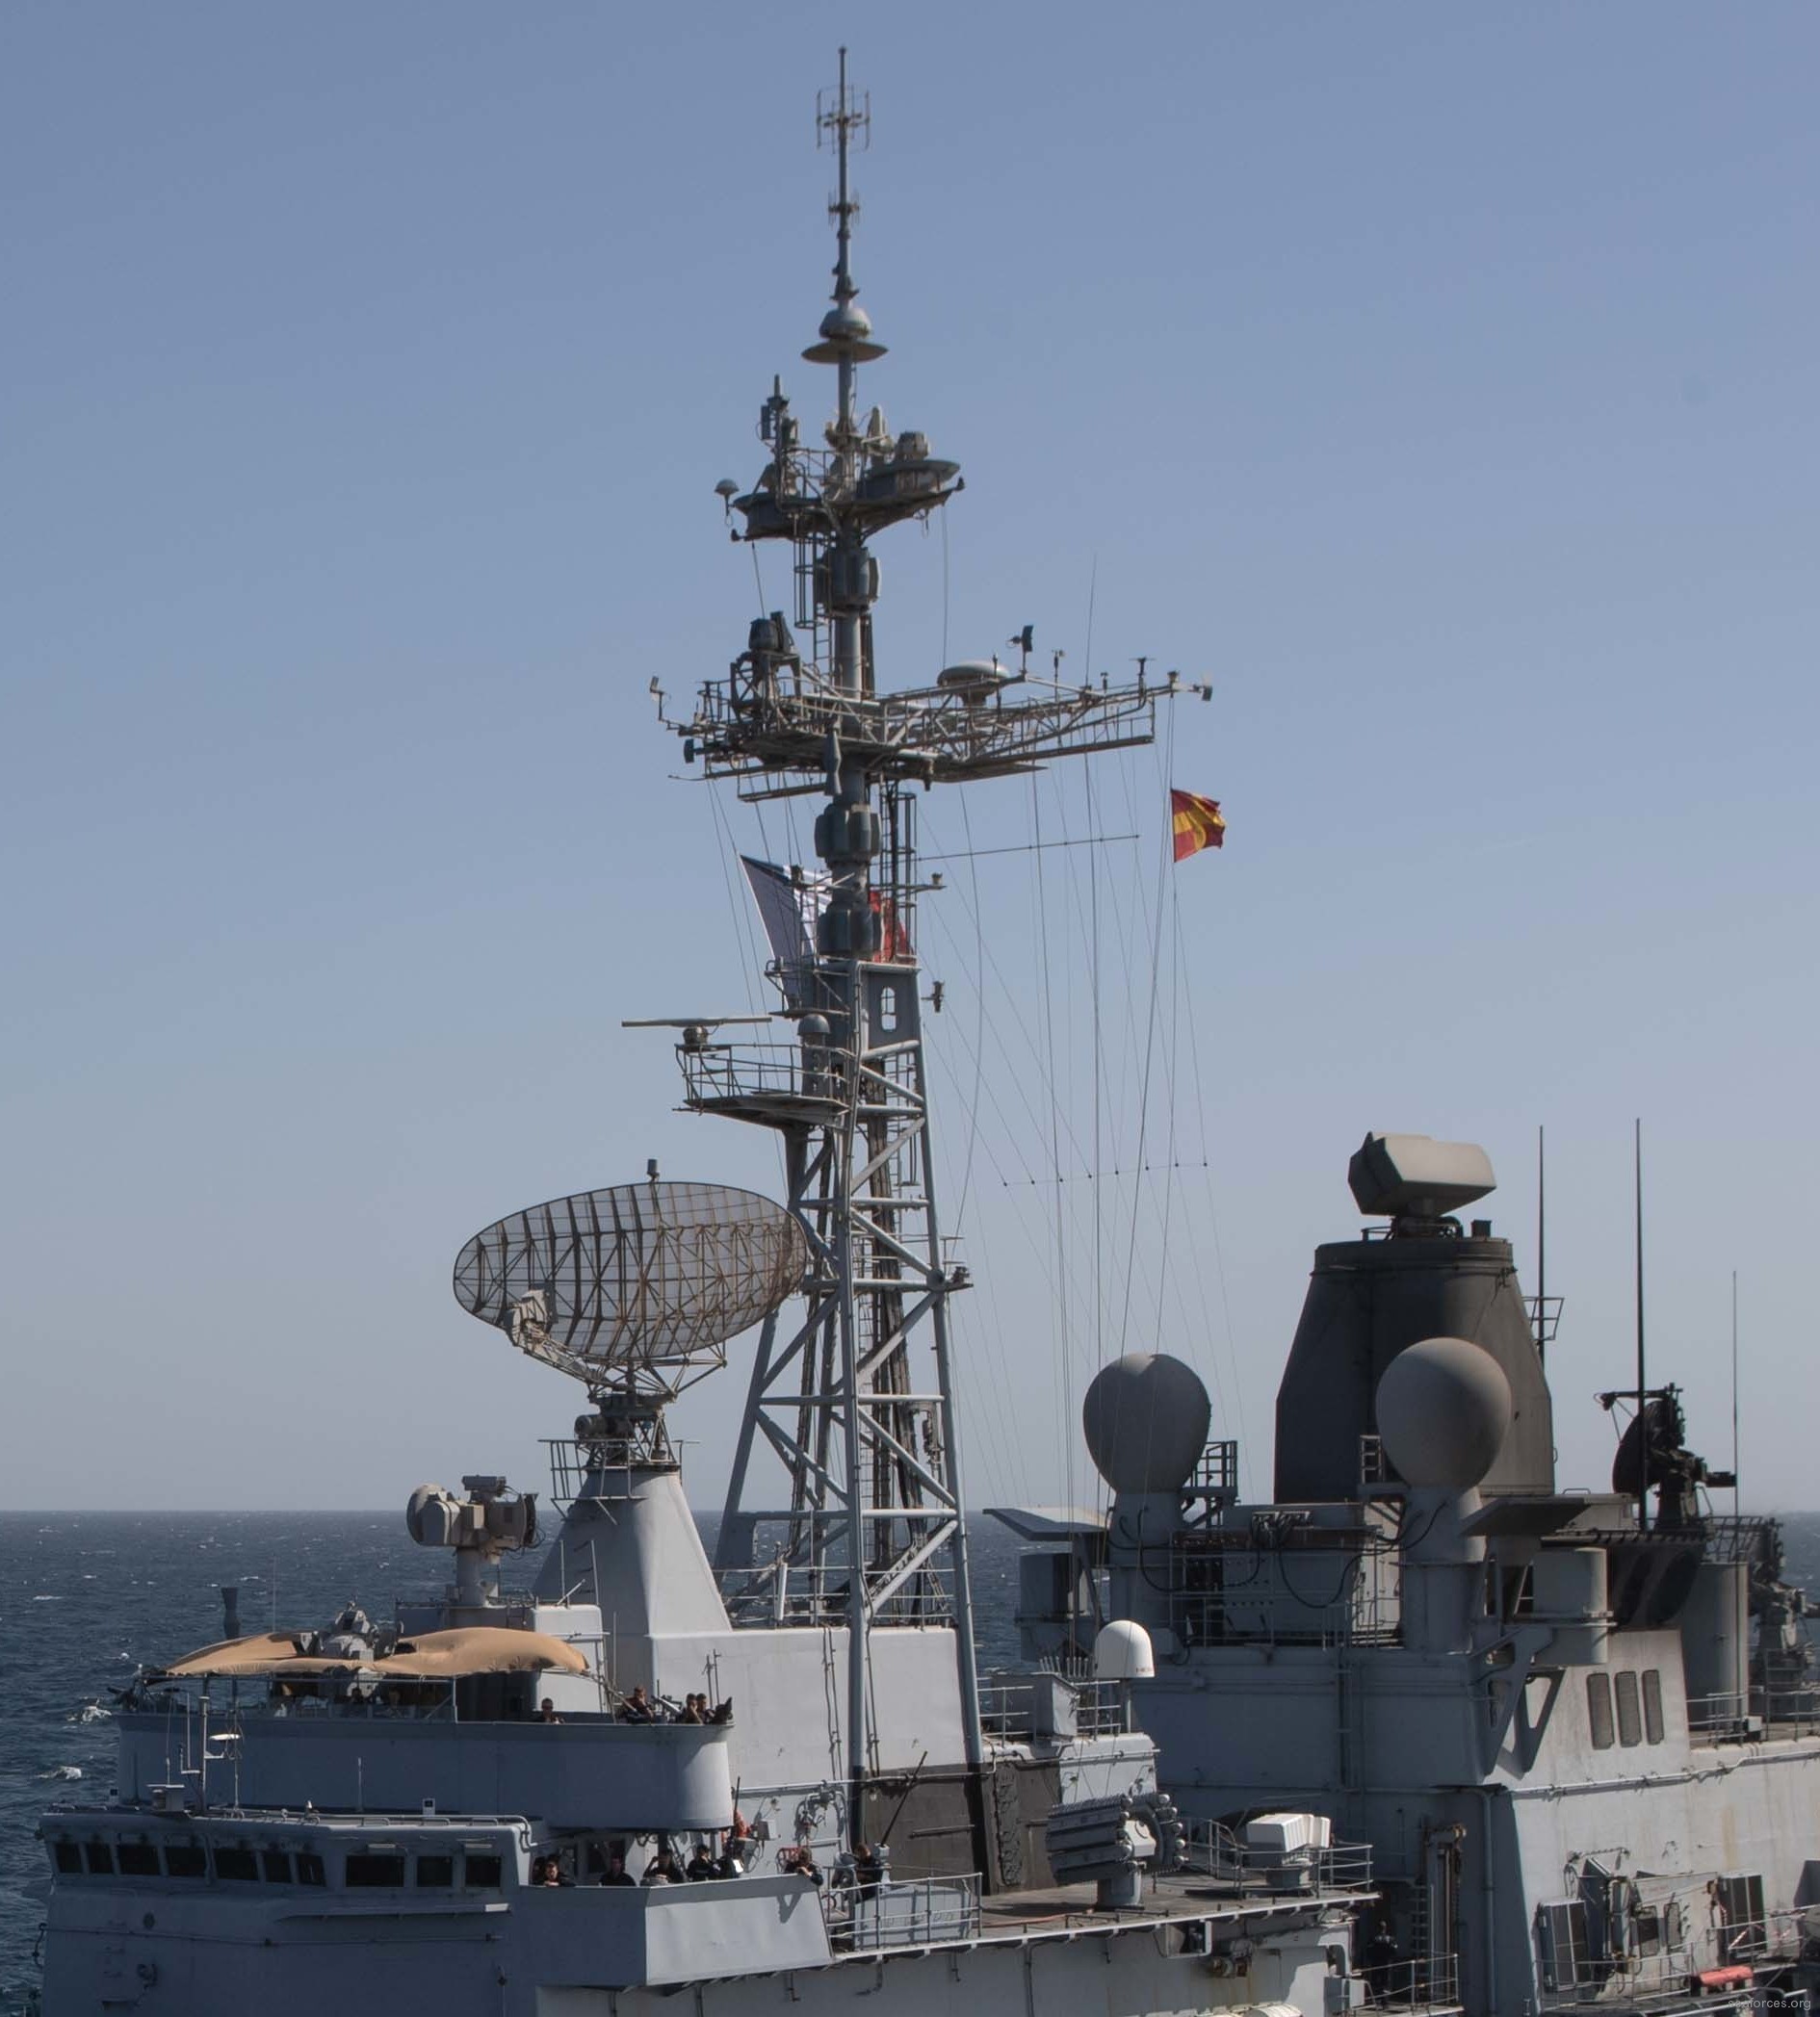 d-614 fs cassard f70aa class guided missile frigate ffgh ddg french navy marine nationale 21b radar antennas